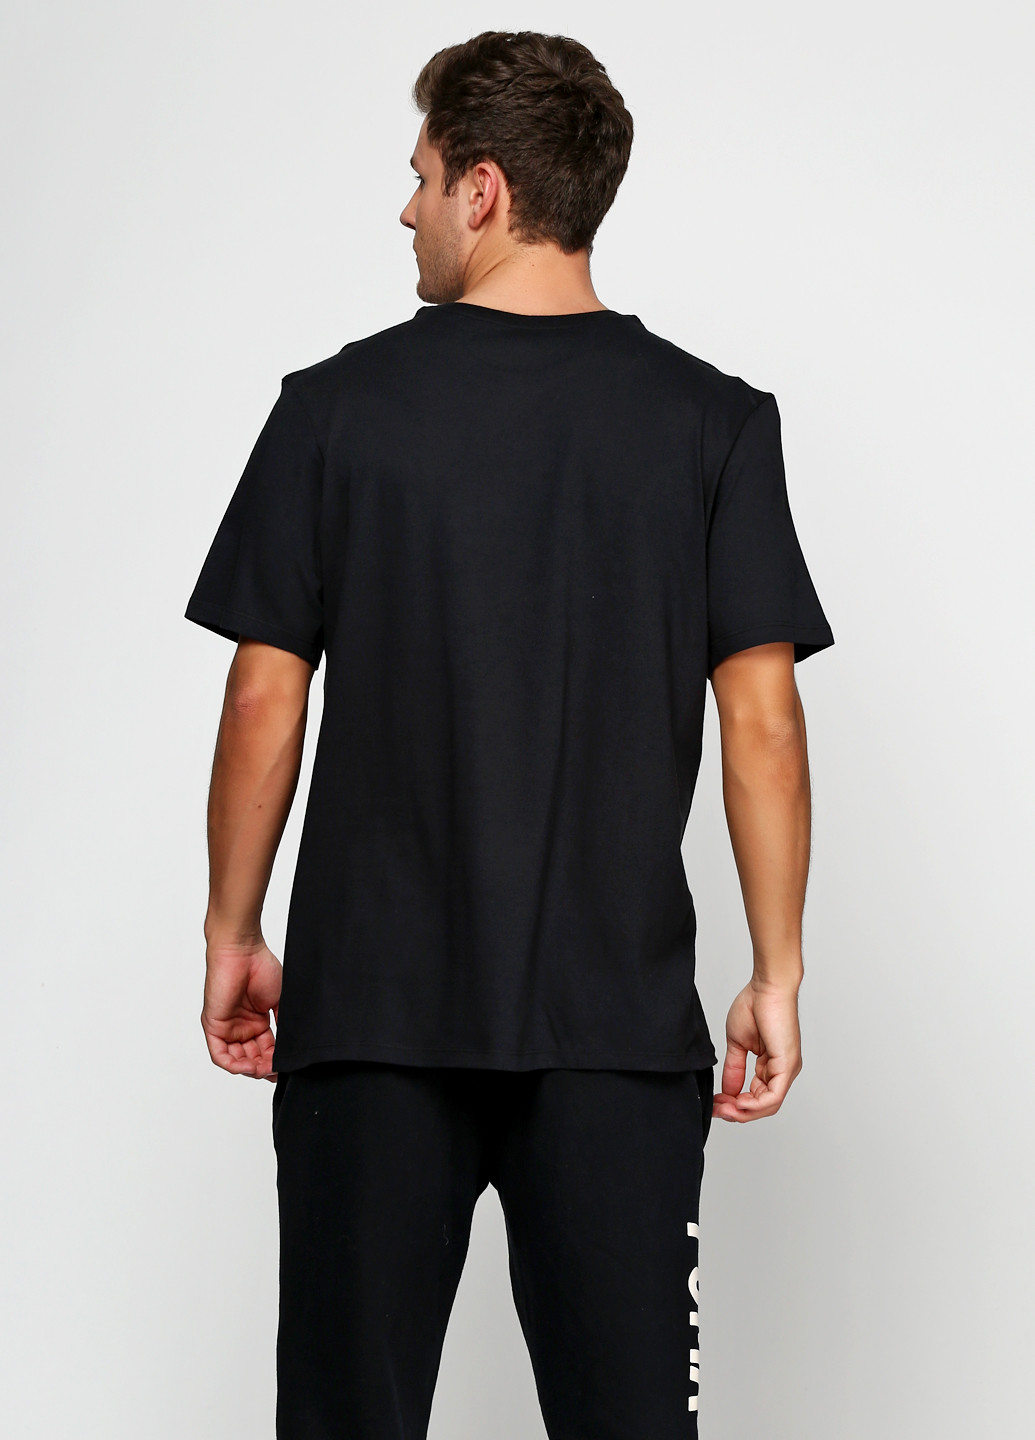 Черная футболка с коротким рукавом Nike